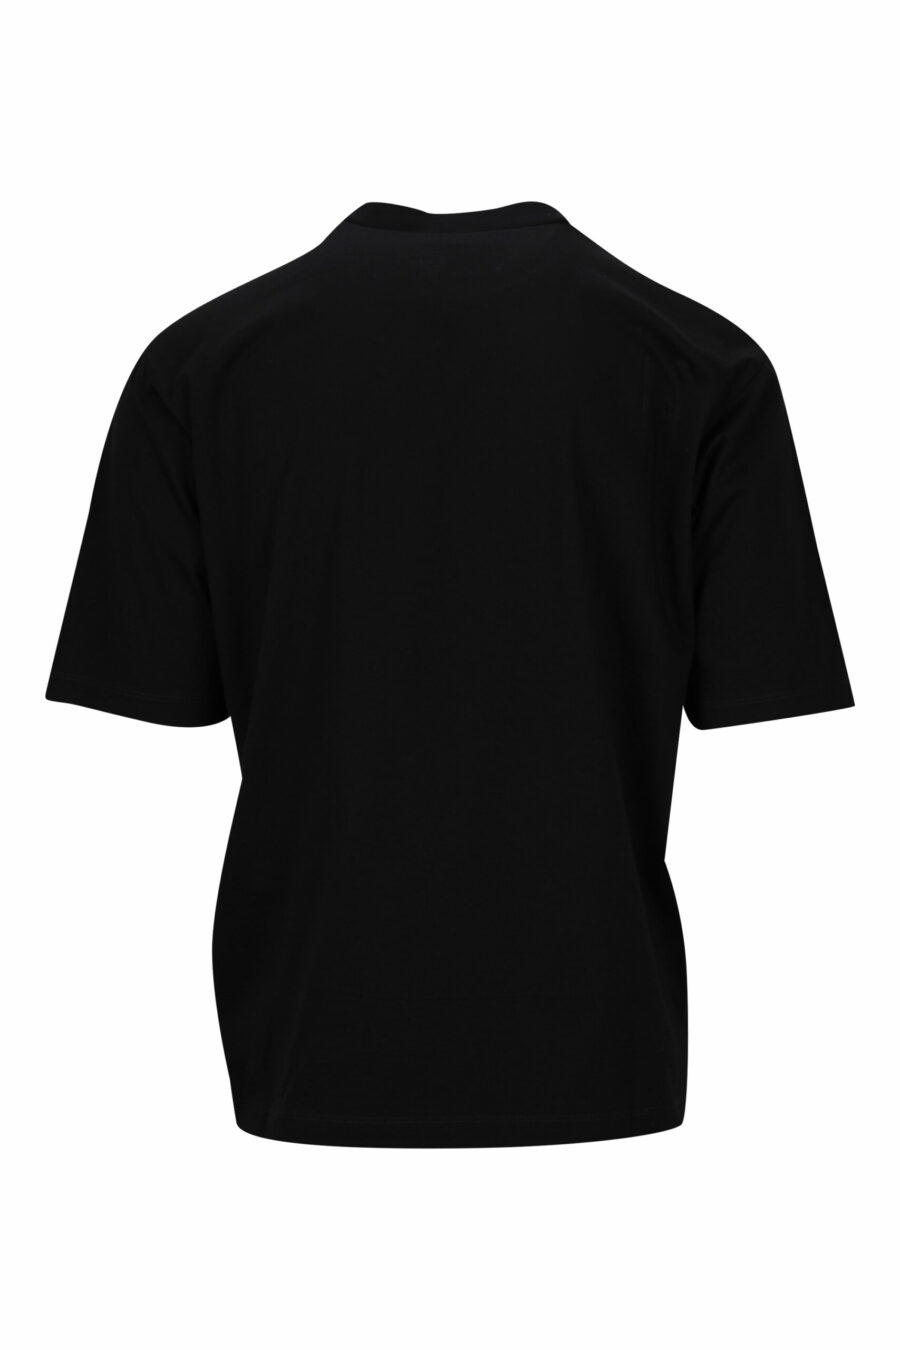 Camiseta negra "oversize" con maxilogo "icon" blanco - 8054148357405 1 scaled